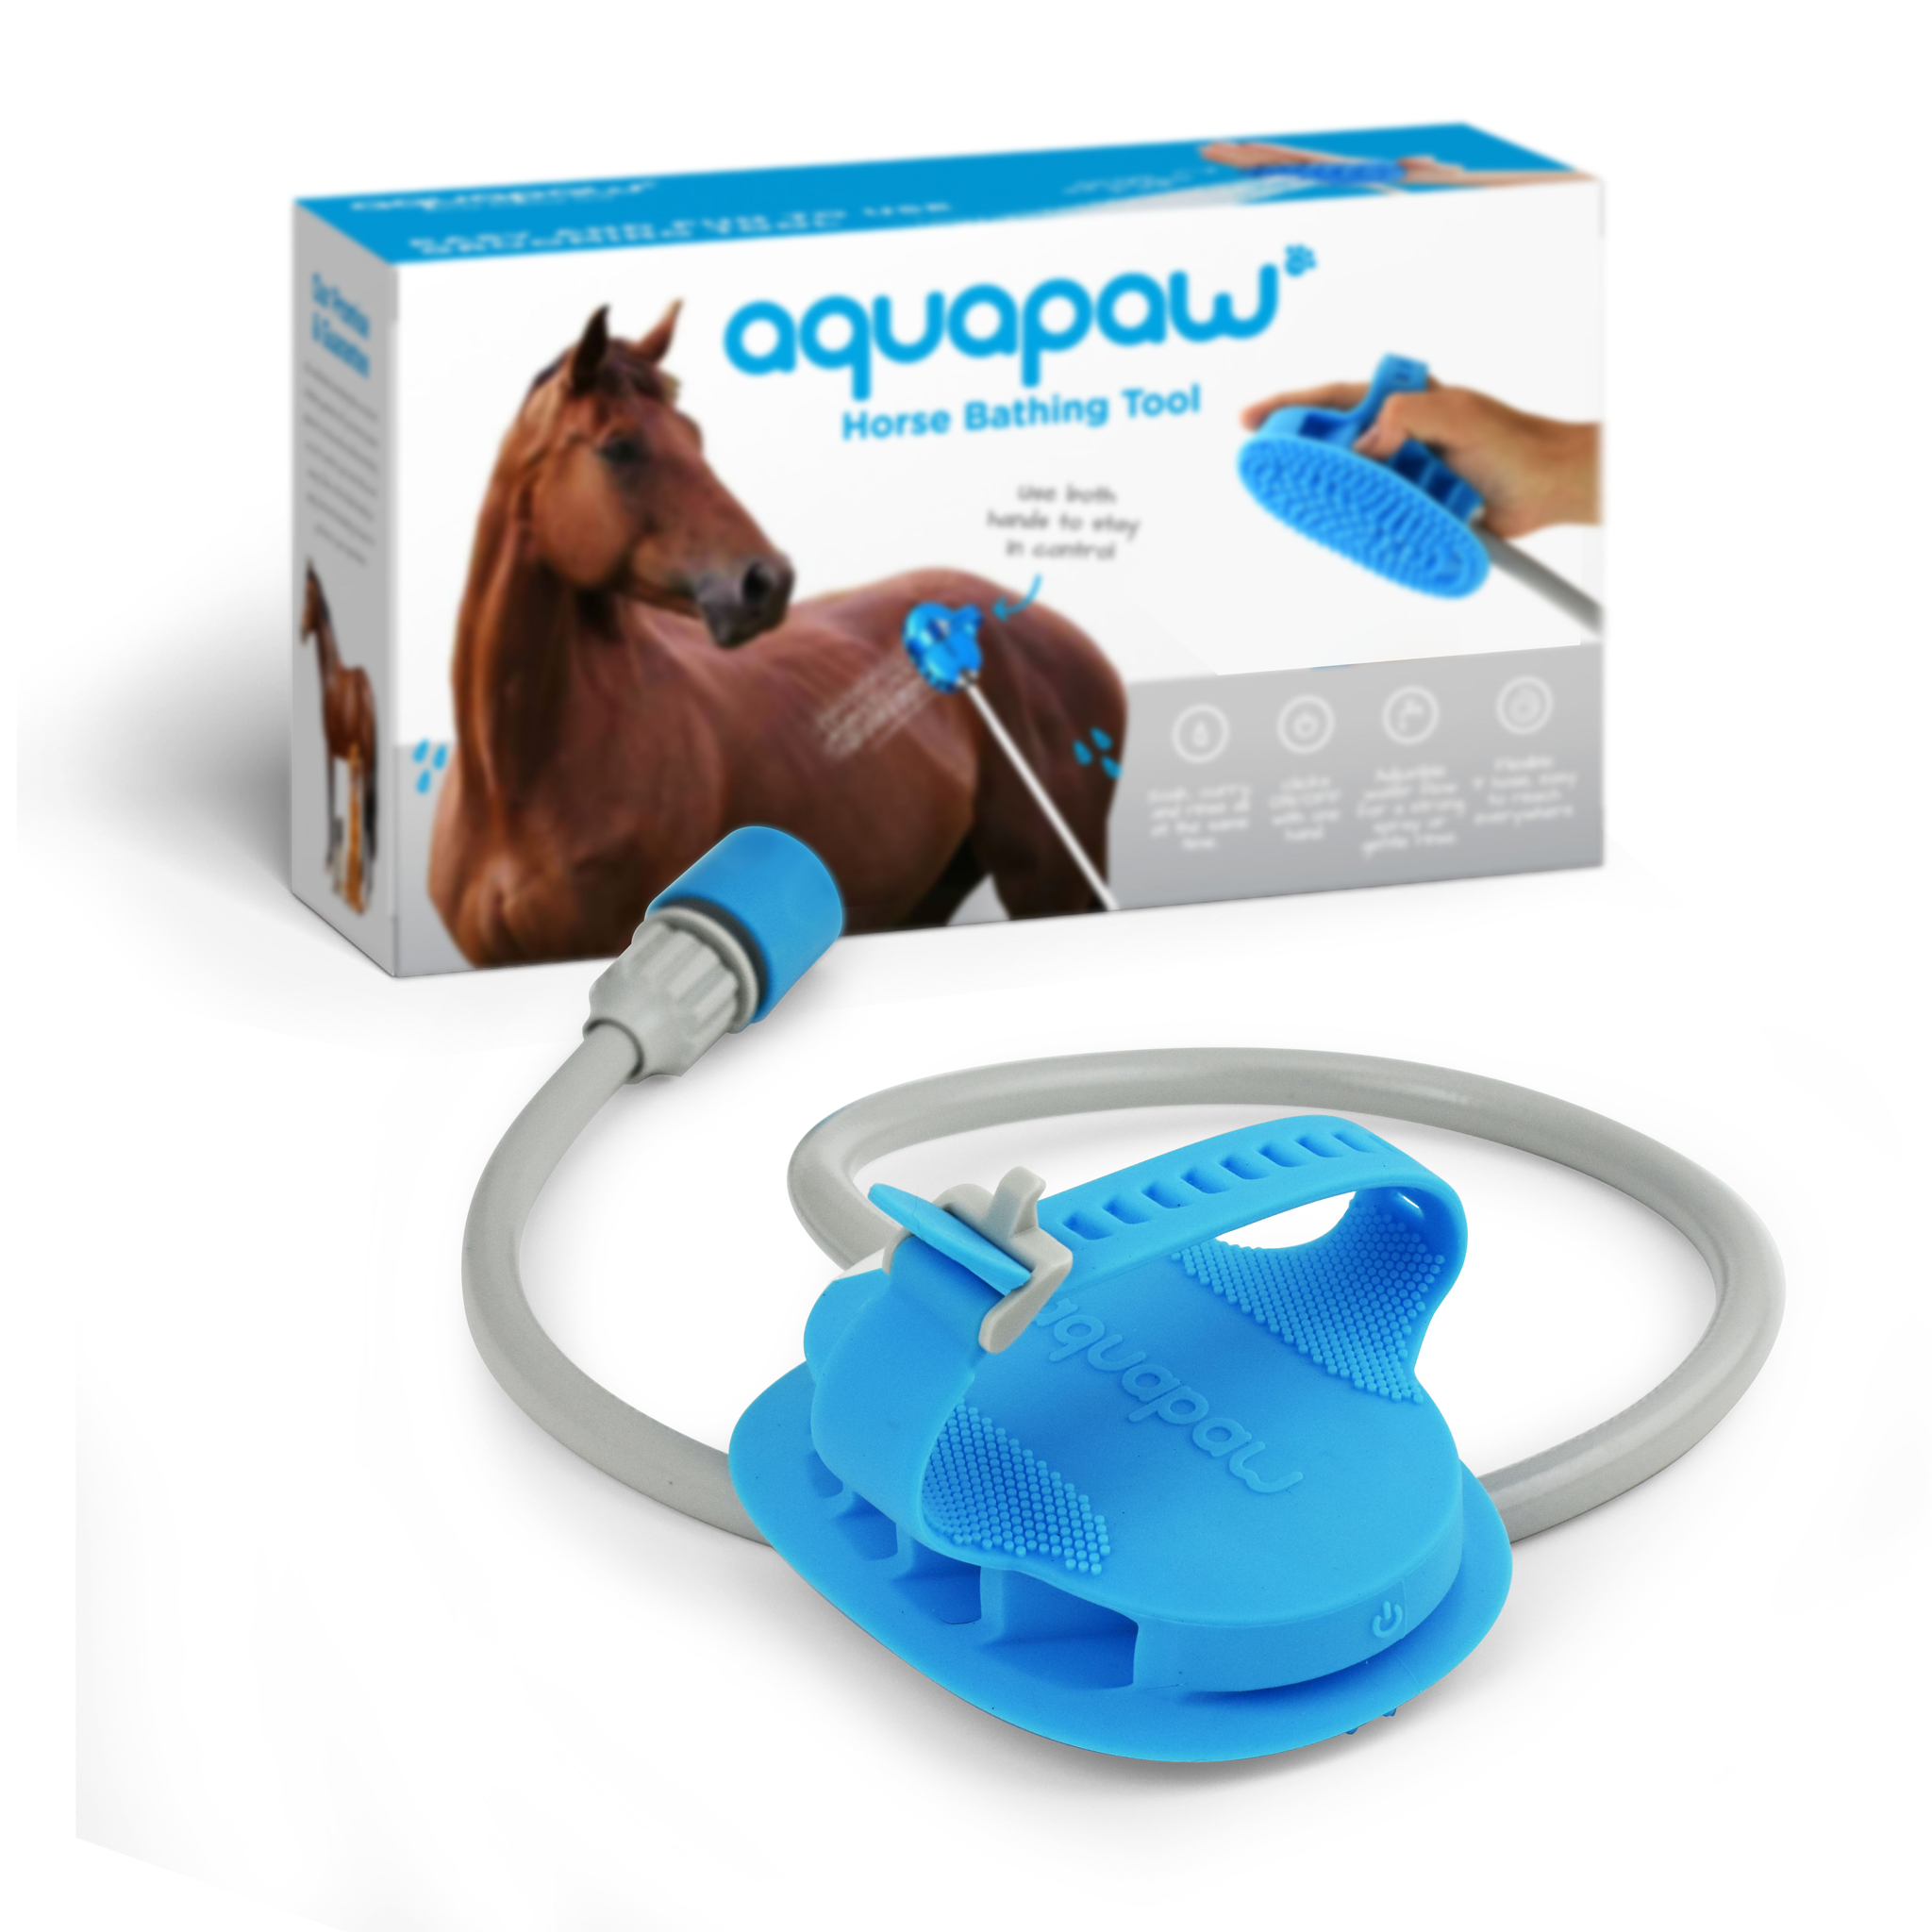 Aquapaw-Equine-Grooming-Tool